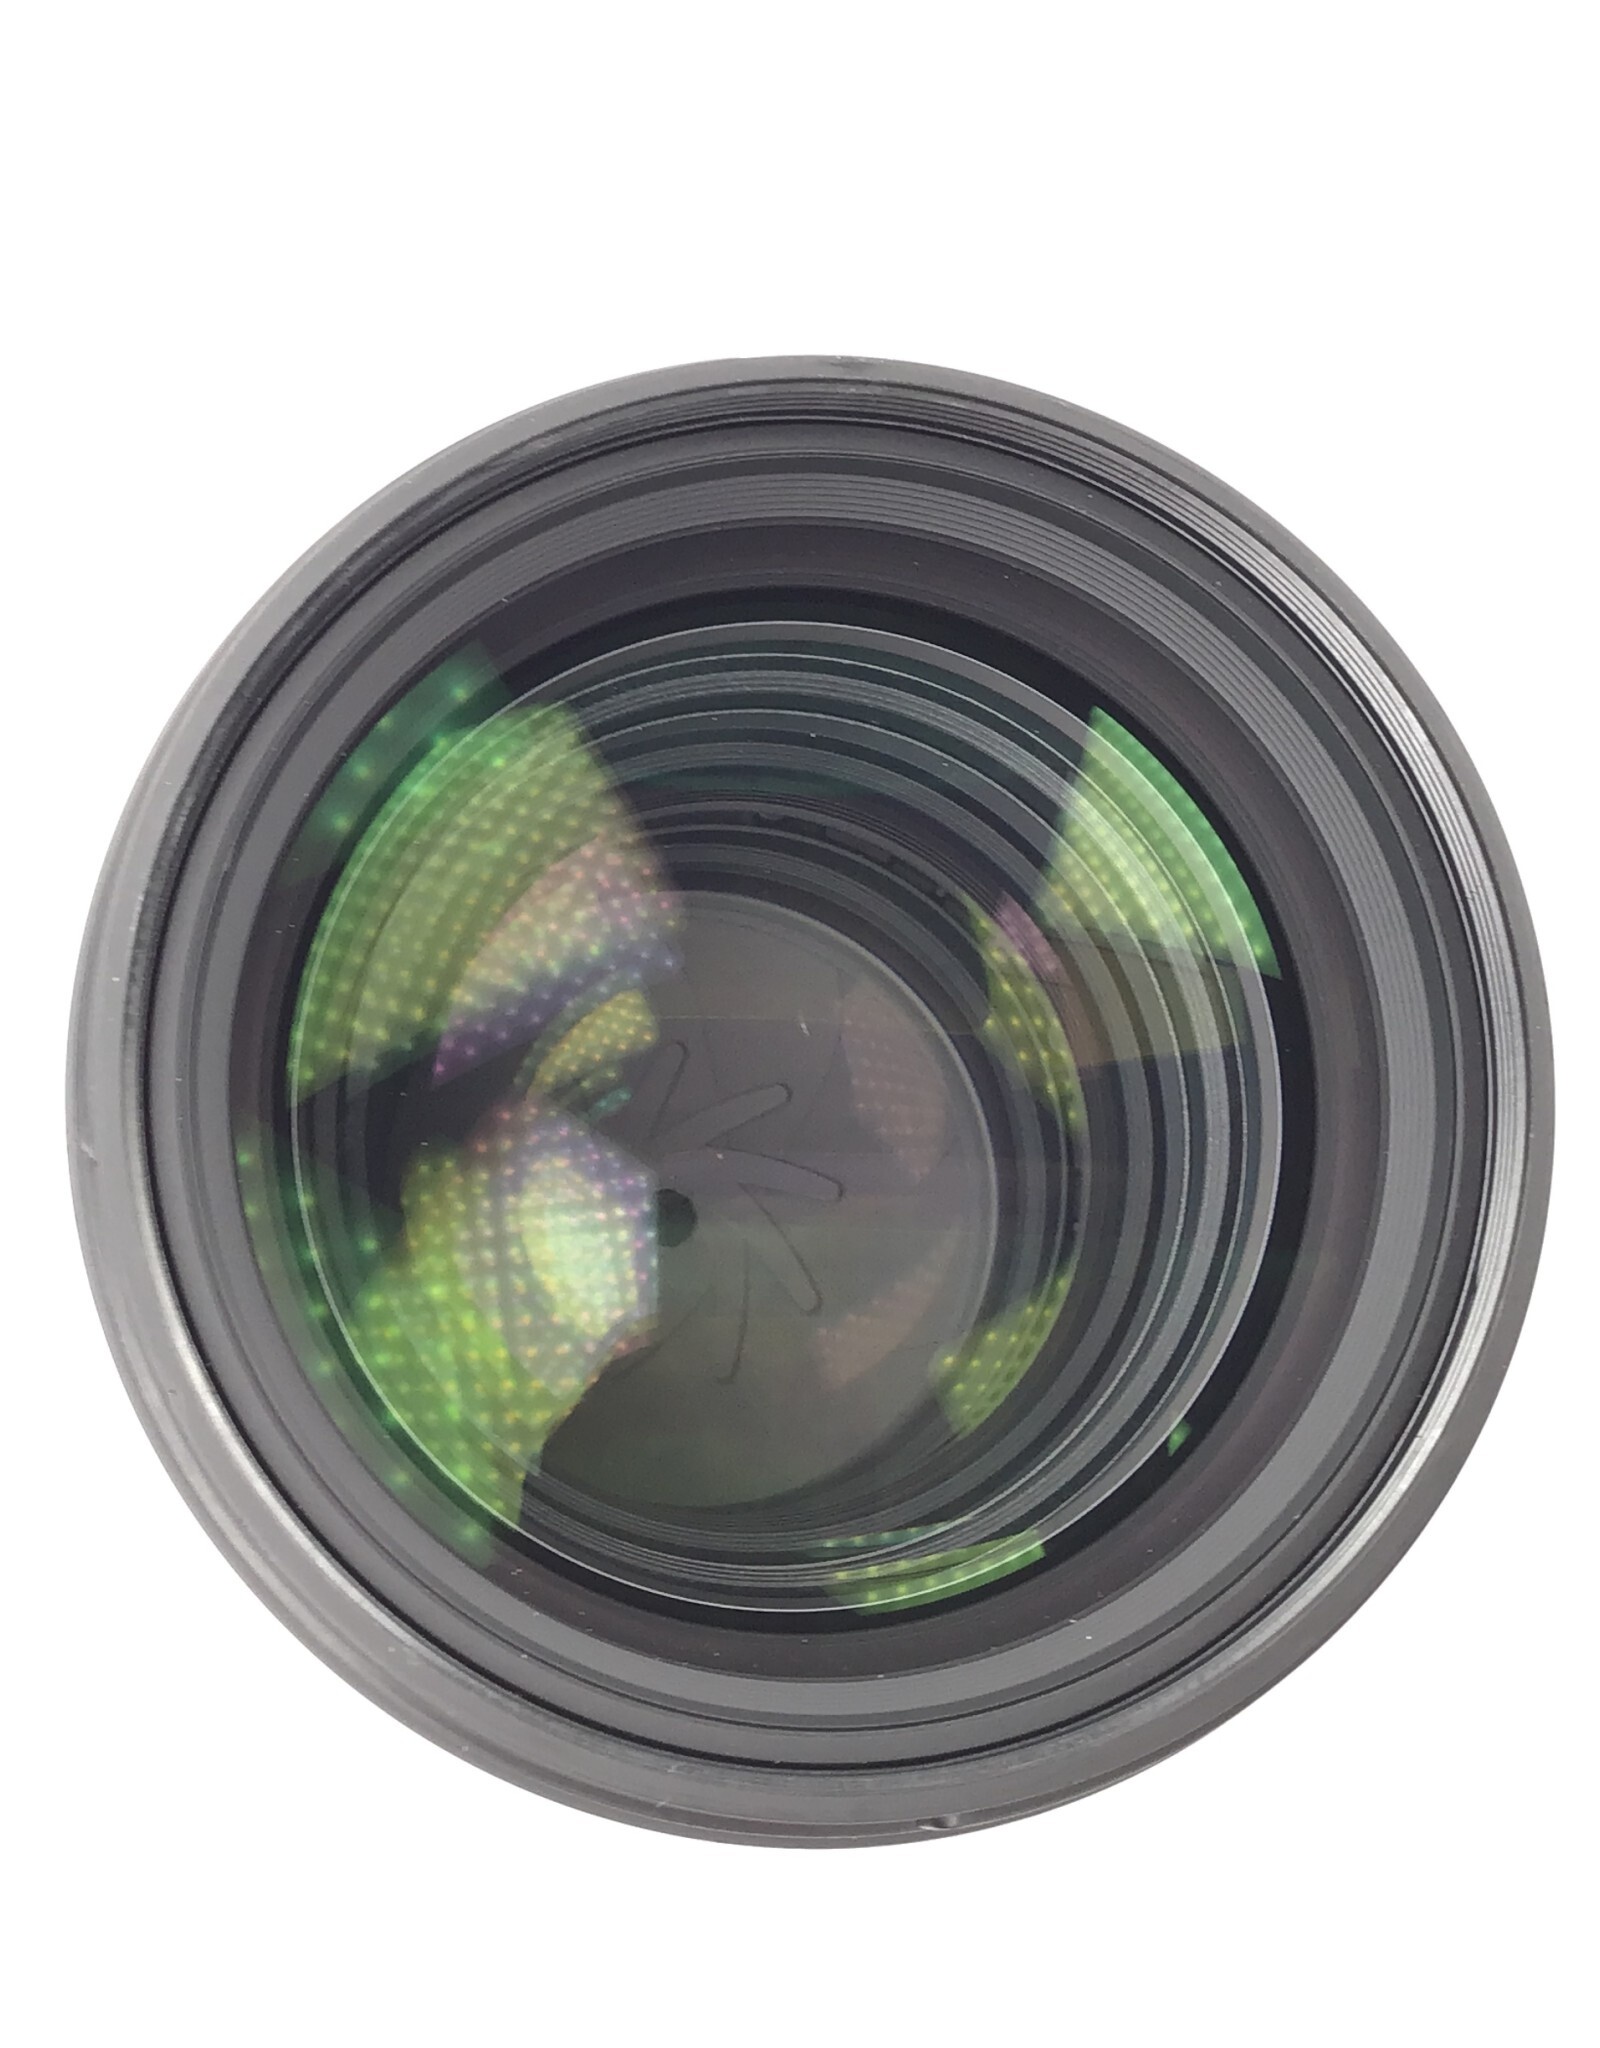 SIGMA Sigma 85mm f1.4 DG Art Lens for Sony E Used Good